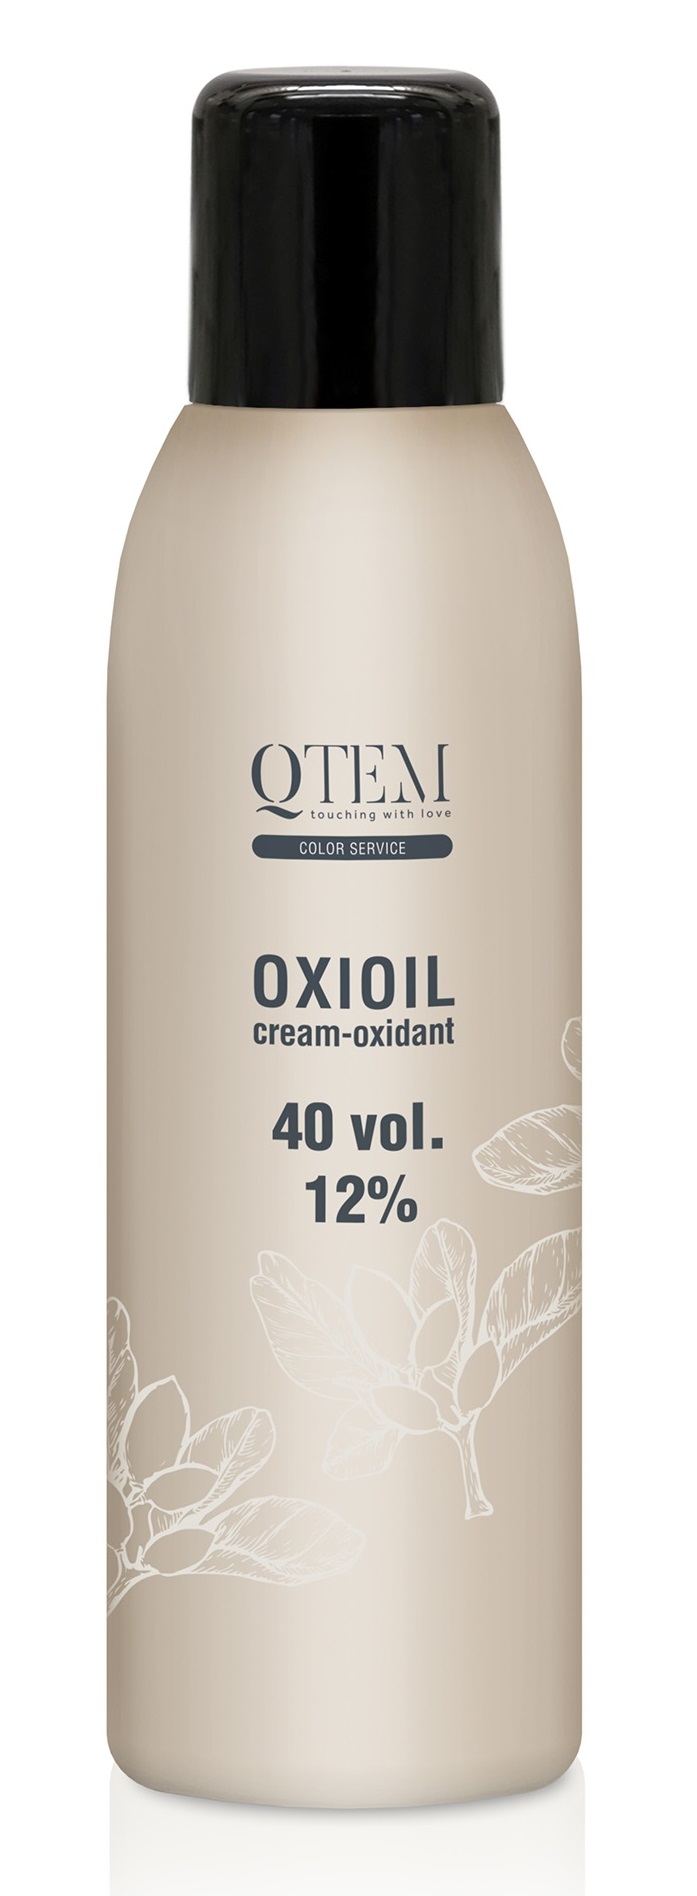 Оксиоил крем-оксидант QTEM 12% (OXIOIL CREAM-OXIDANT 40 Vol) 1000 мл